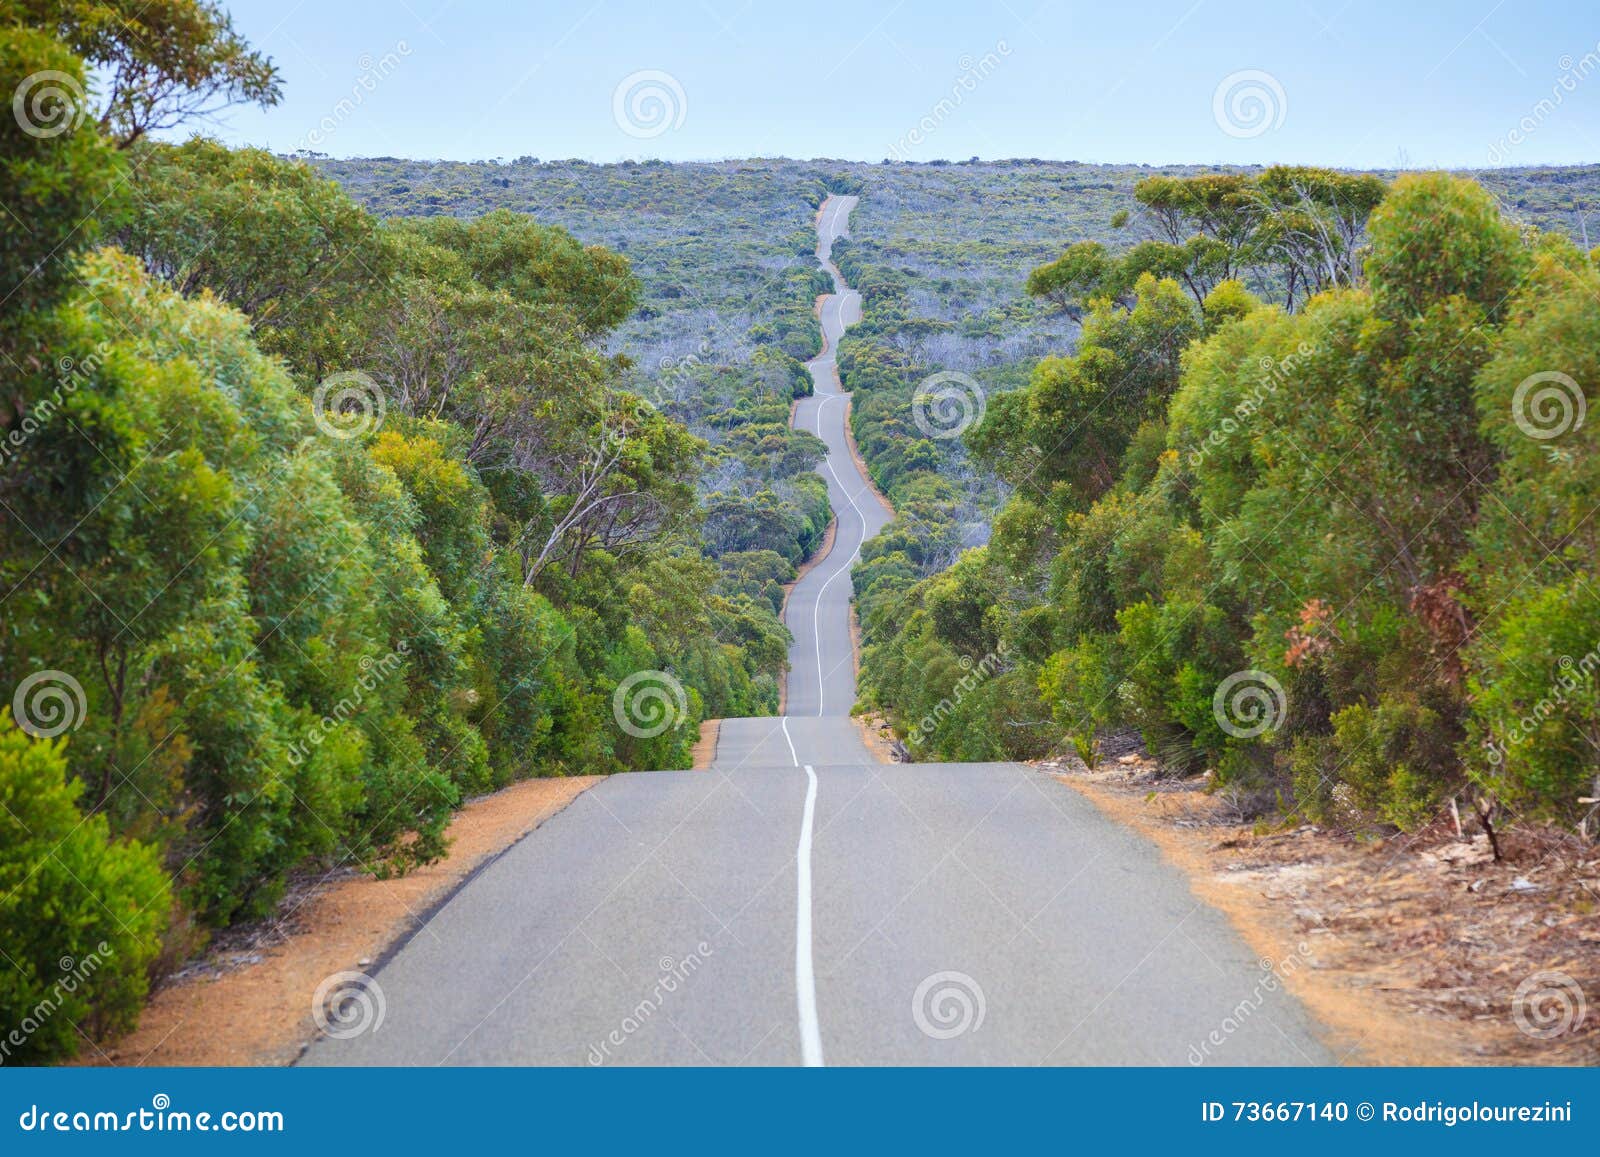 Kangaroo Island Road South Australia Stock Photo - Image of wine, pristine:  73667140